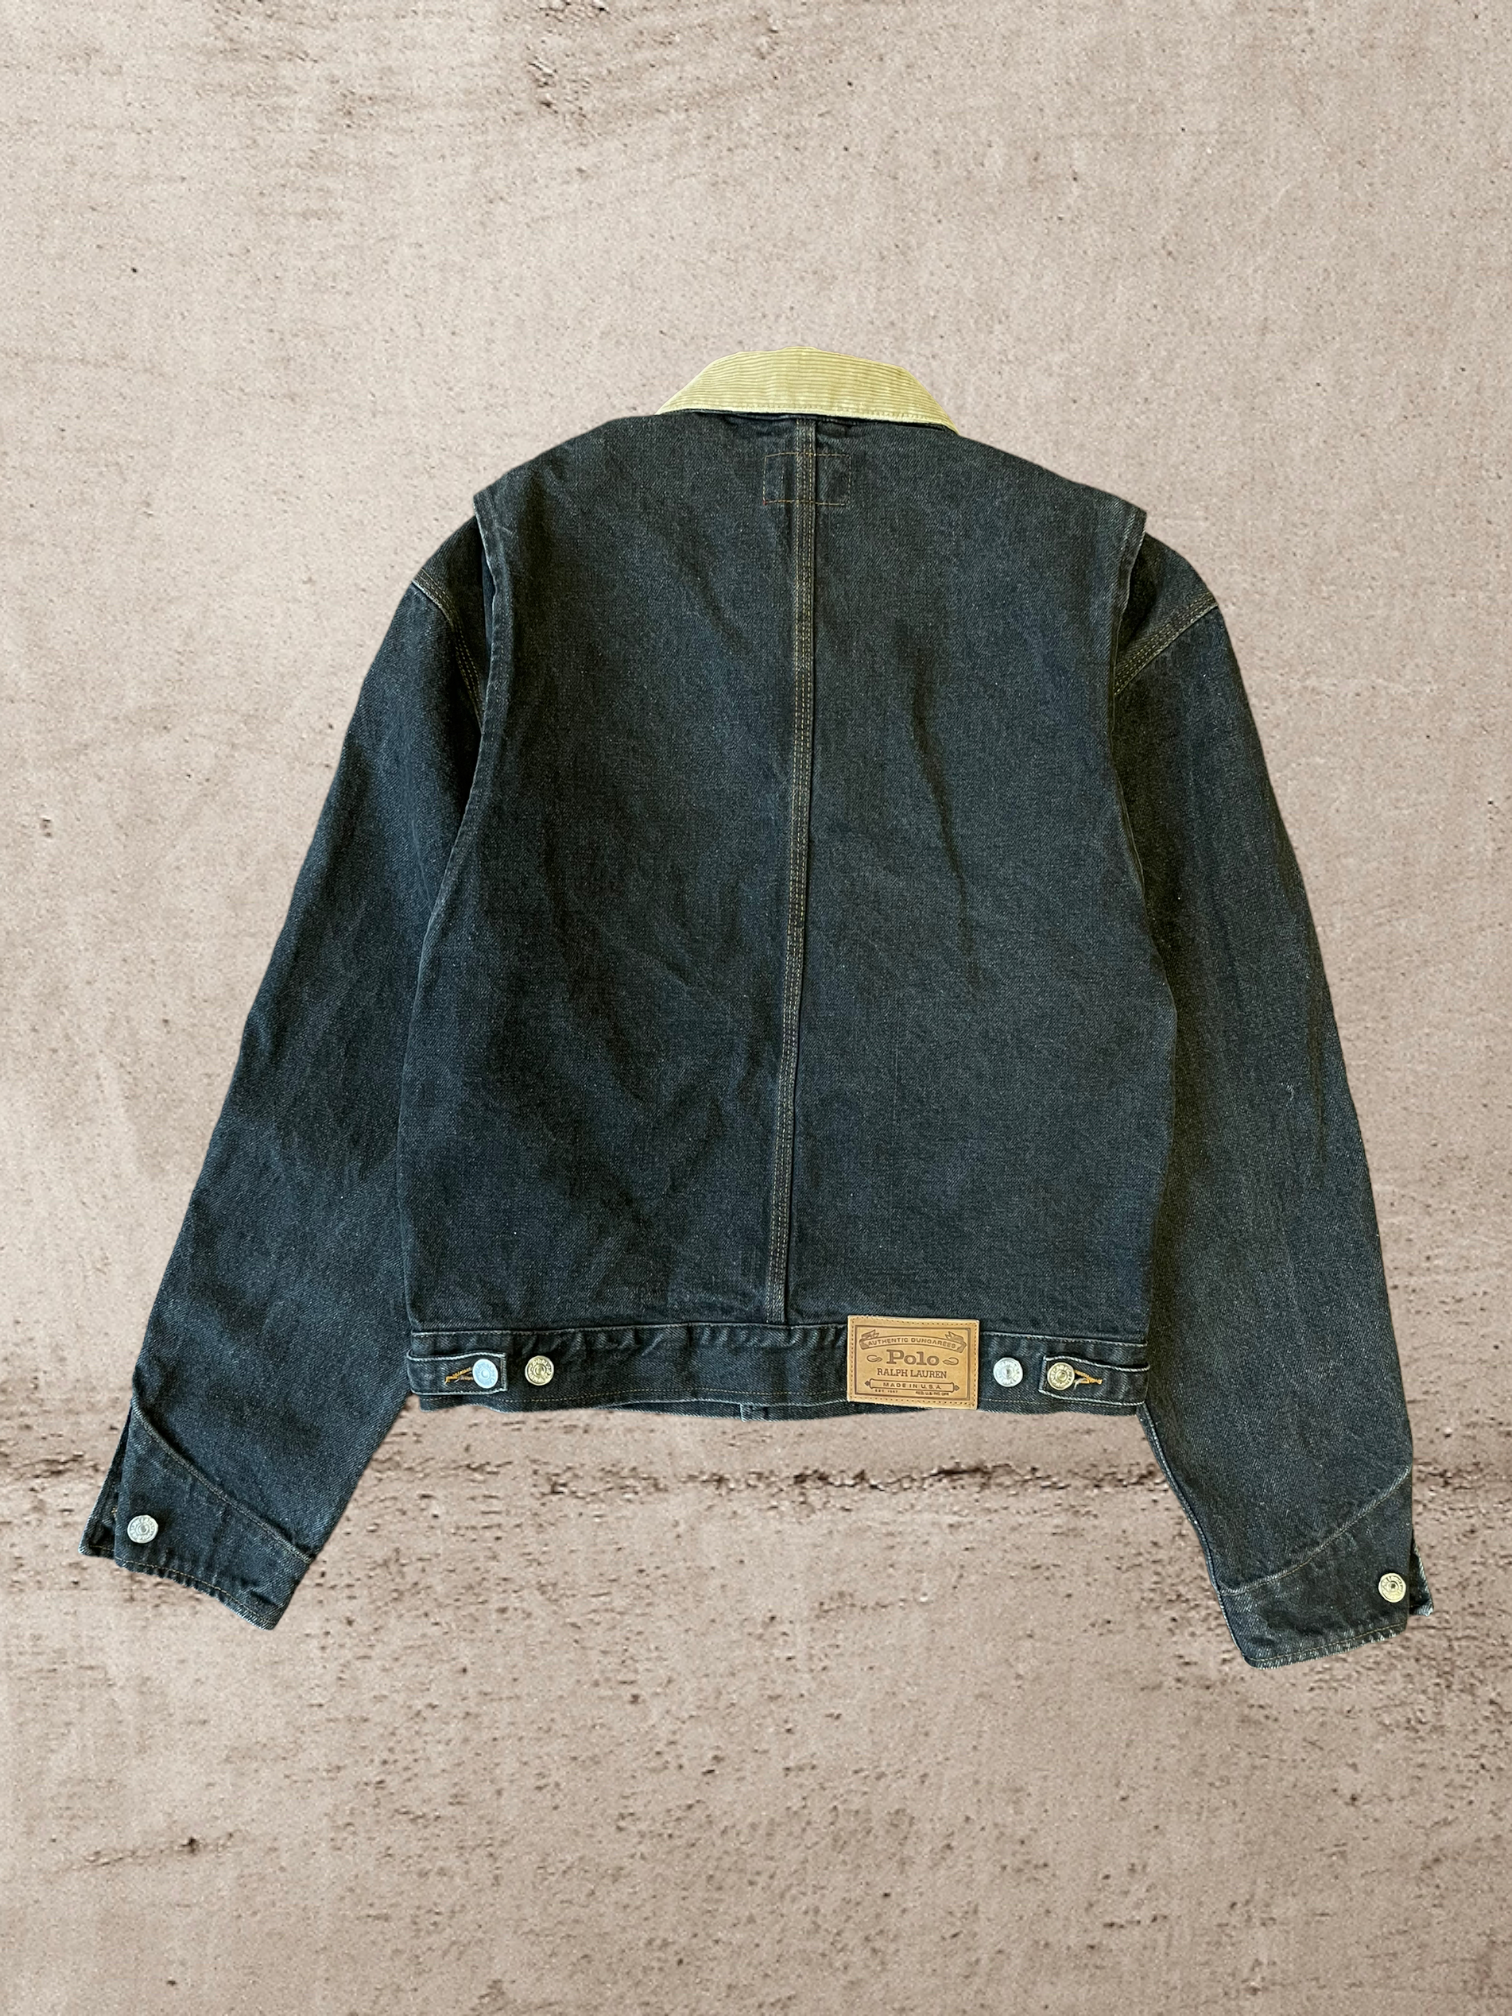 90s Polo Ralph Lauren Dungarees Denim Jacket - Medium